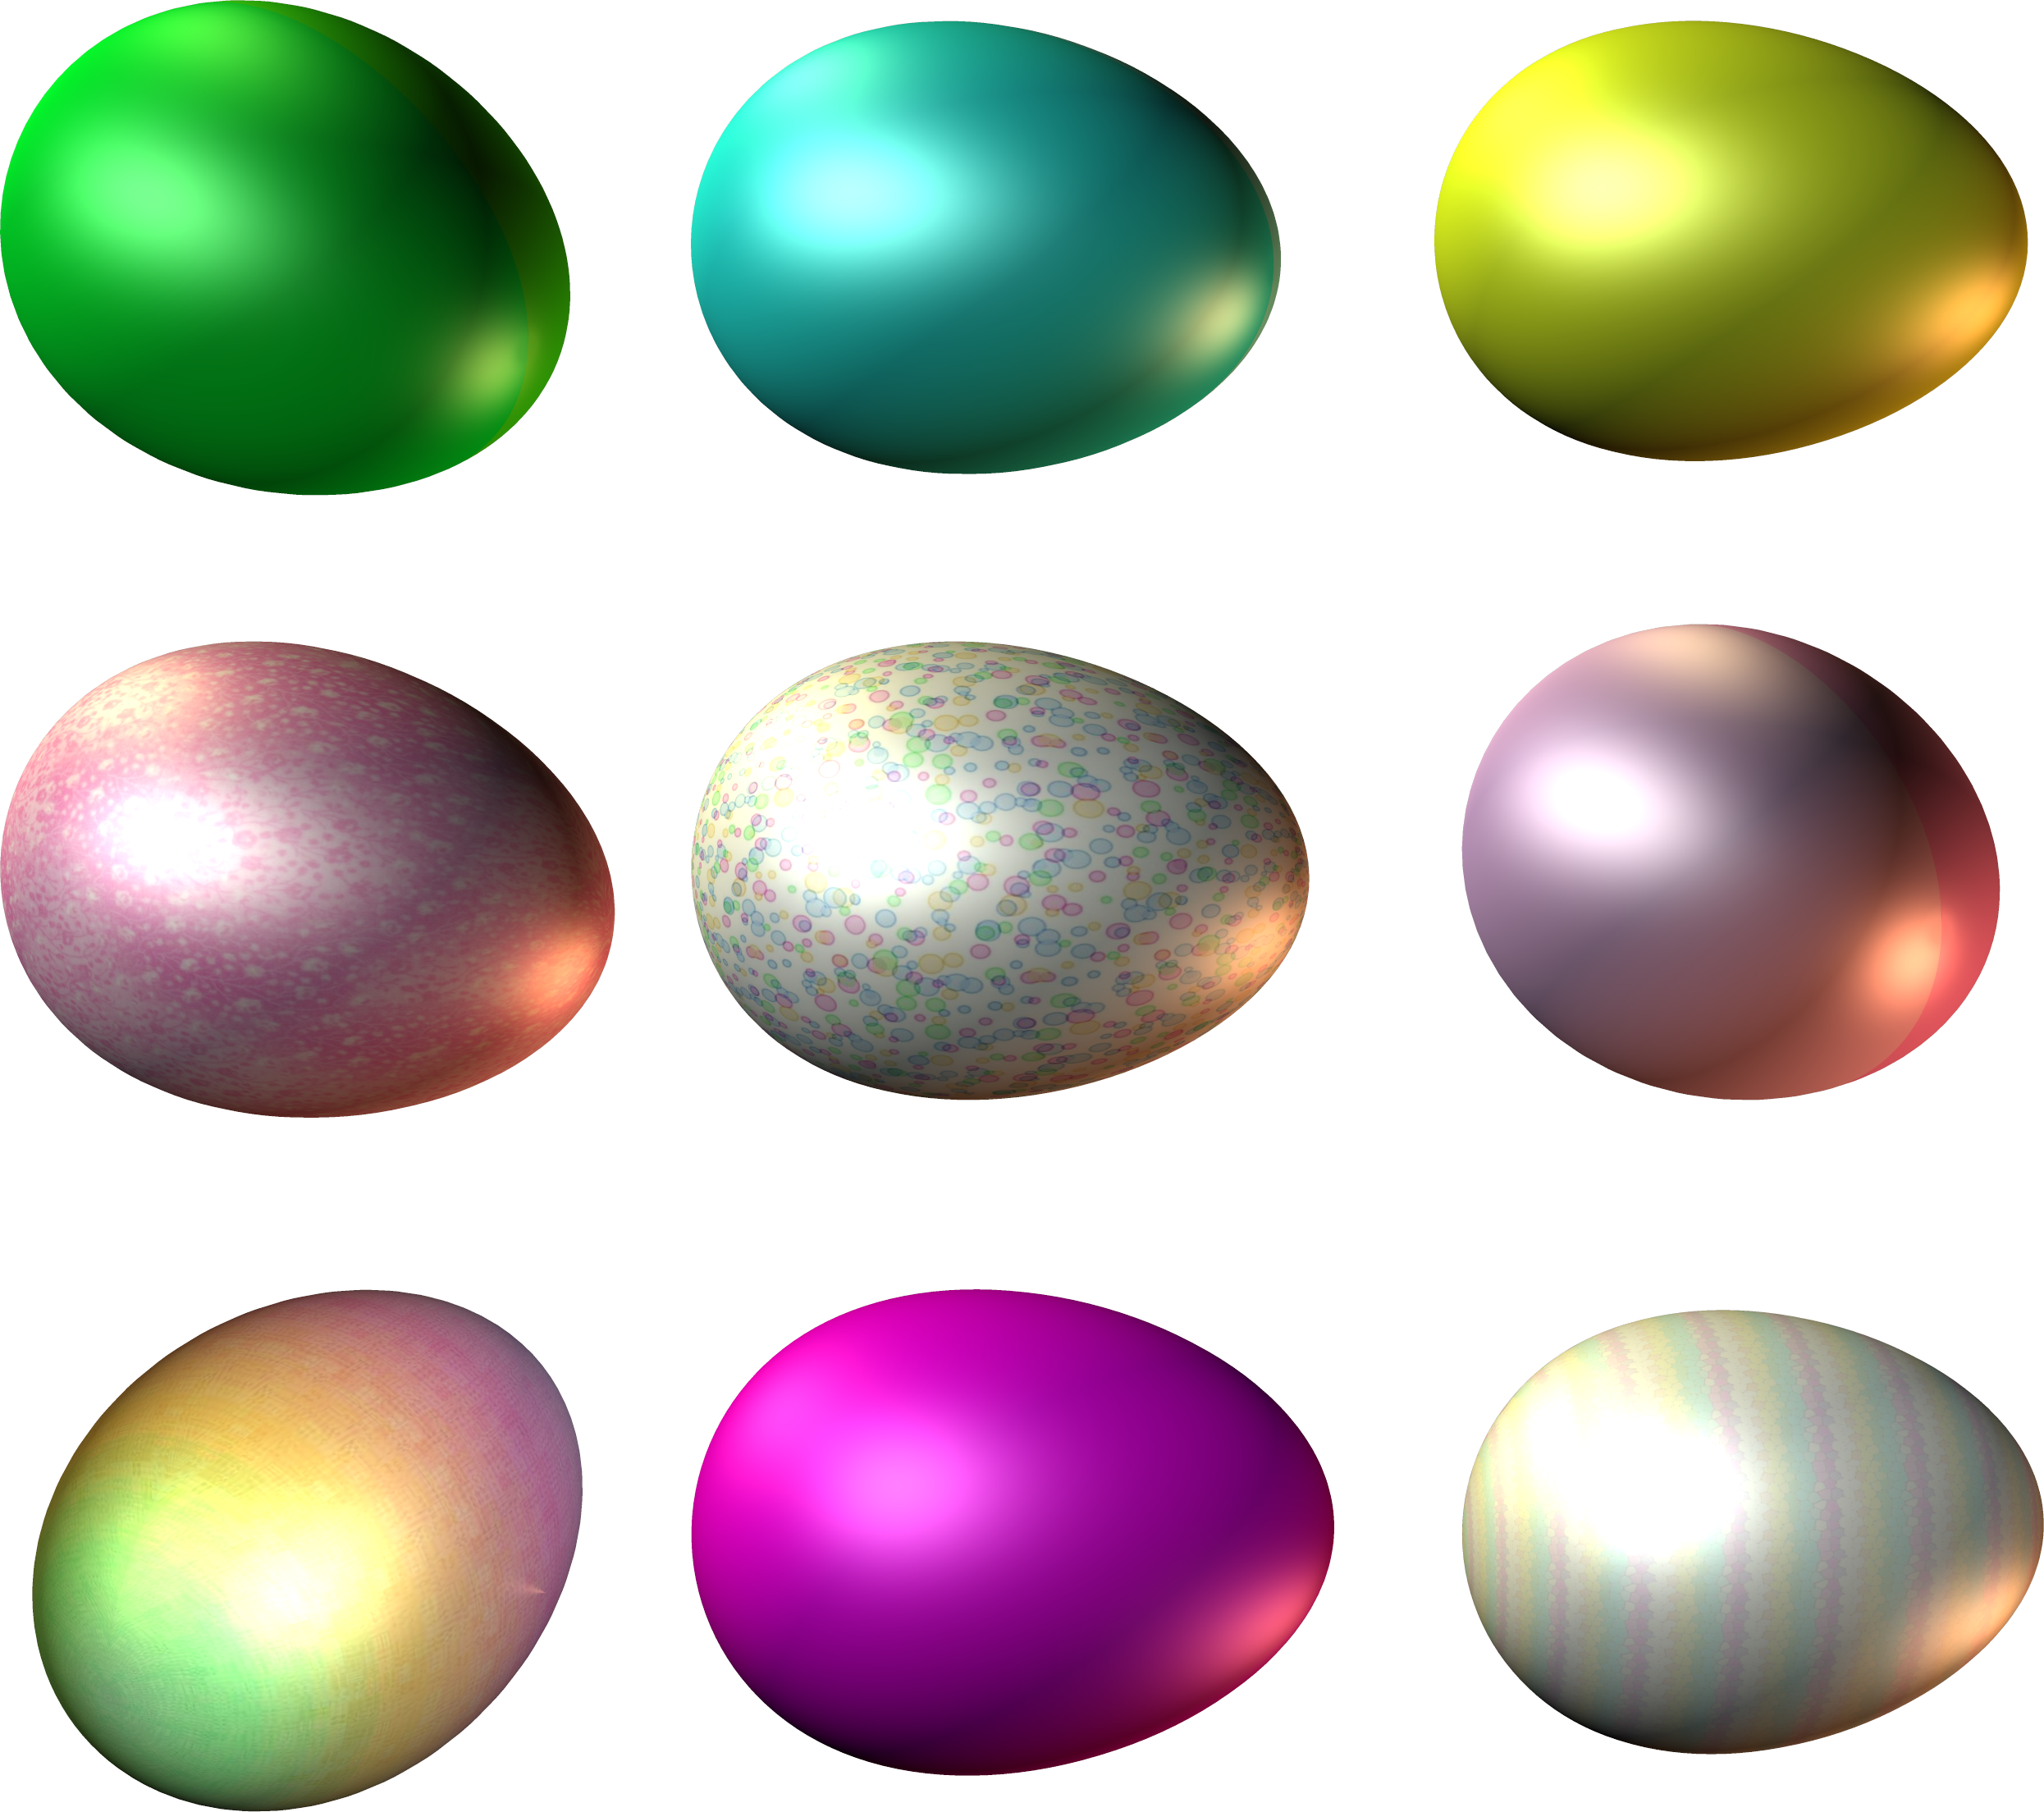 Colorful Shiny Eggs